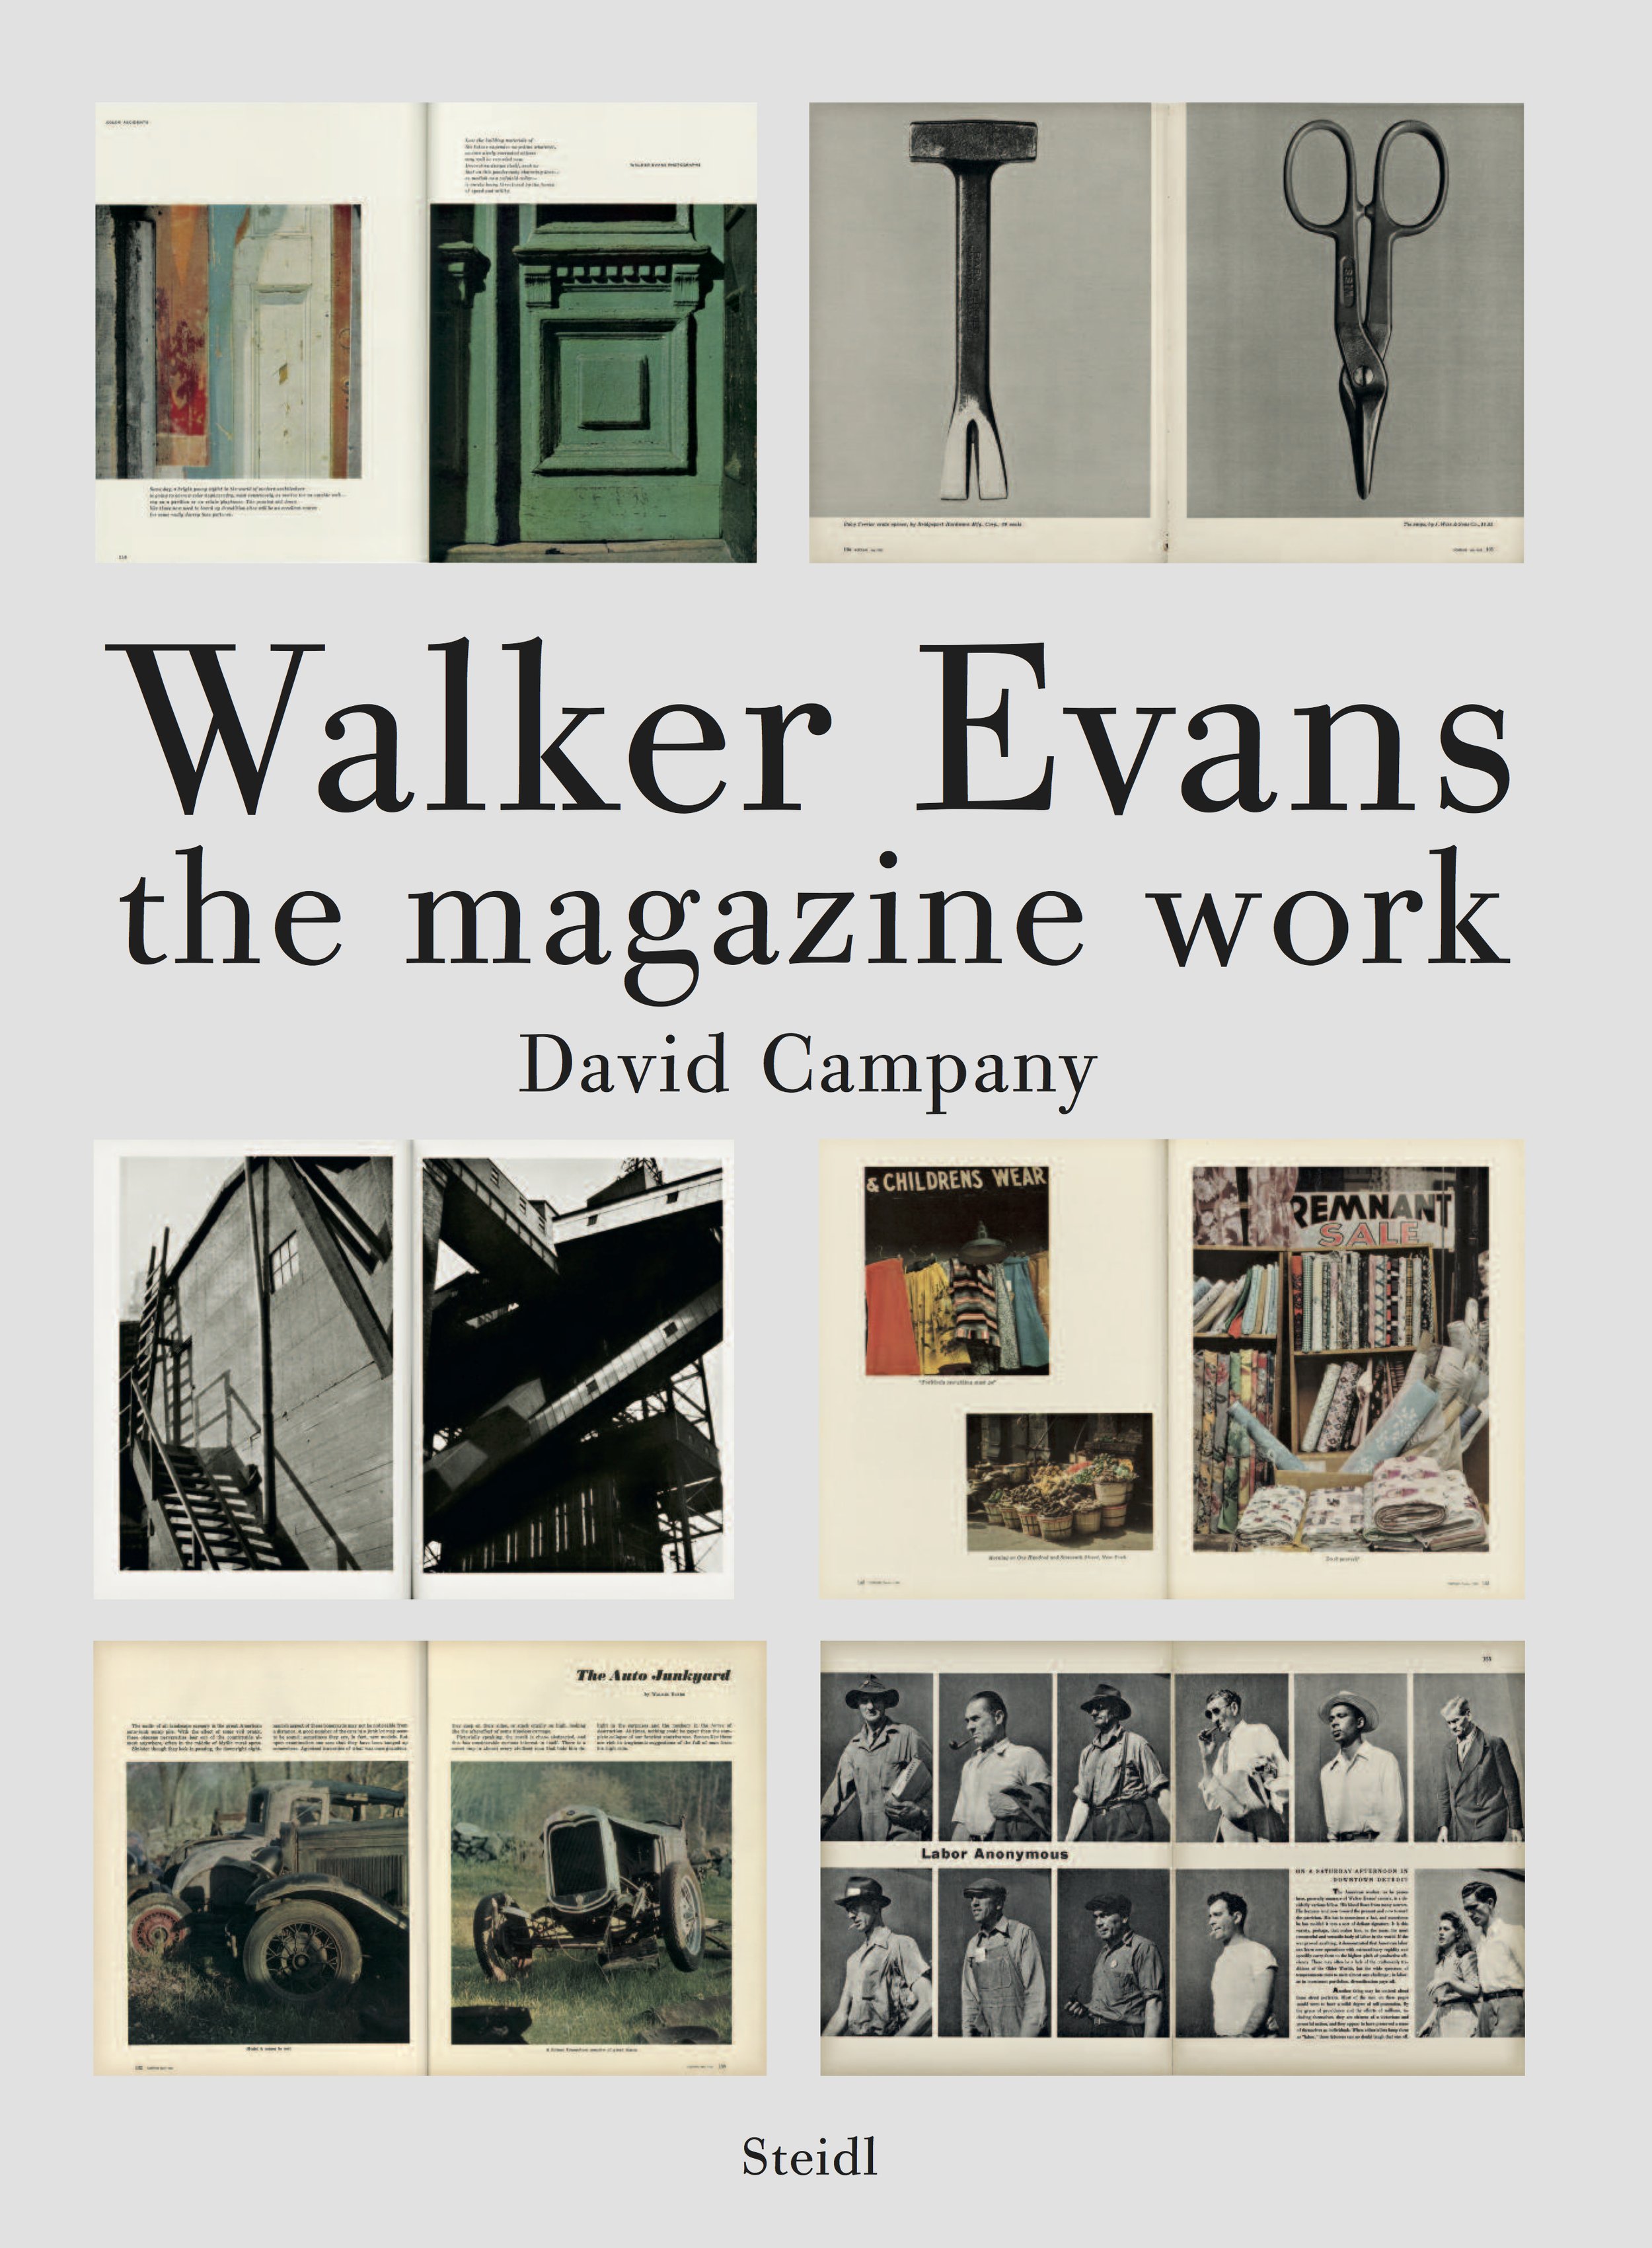 Walker Evans-the magazine work, Steidl, by David Campany, 2014 COVER.jpg